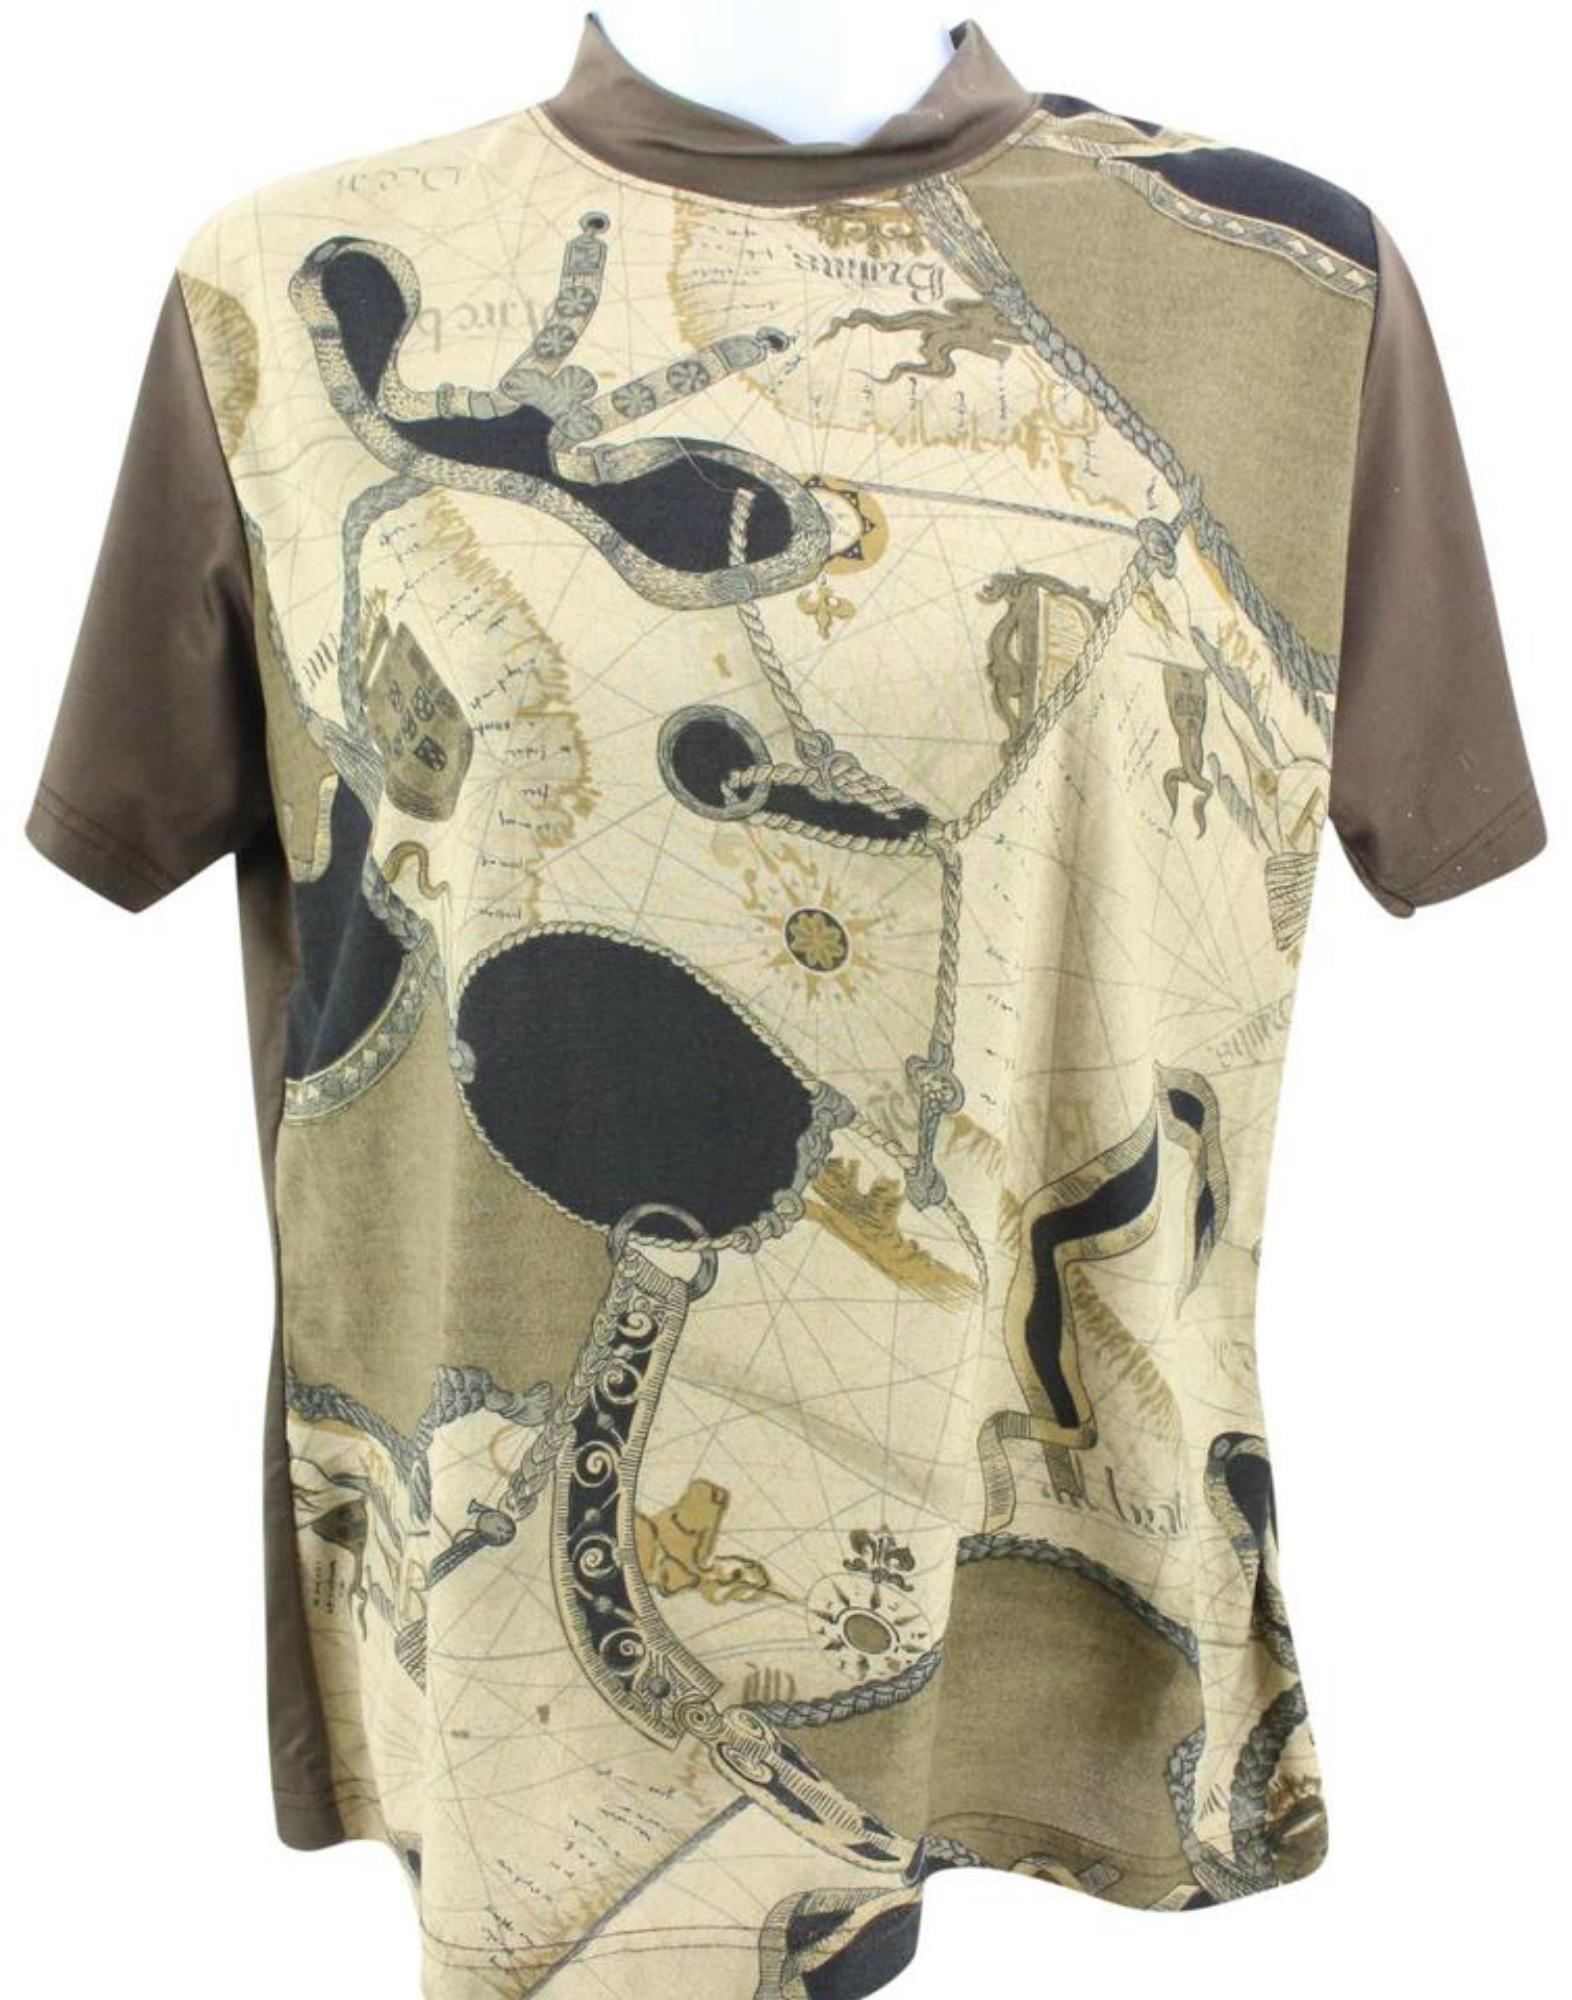 Hermès Rare Brown x Khaki Green Gender Fluid Map T-Shirt Tee Shirt 121h34
Made In: Italy
Measurements: Length:  19.5